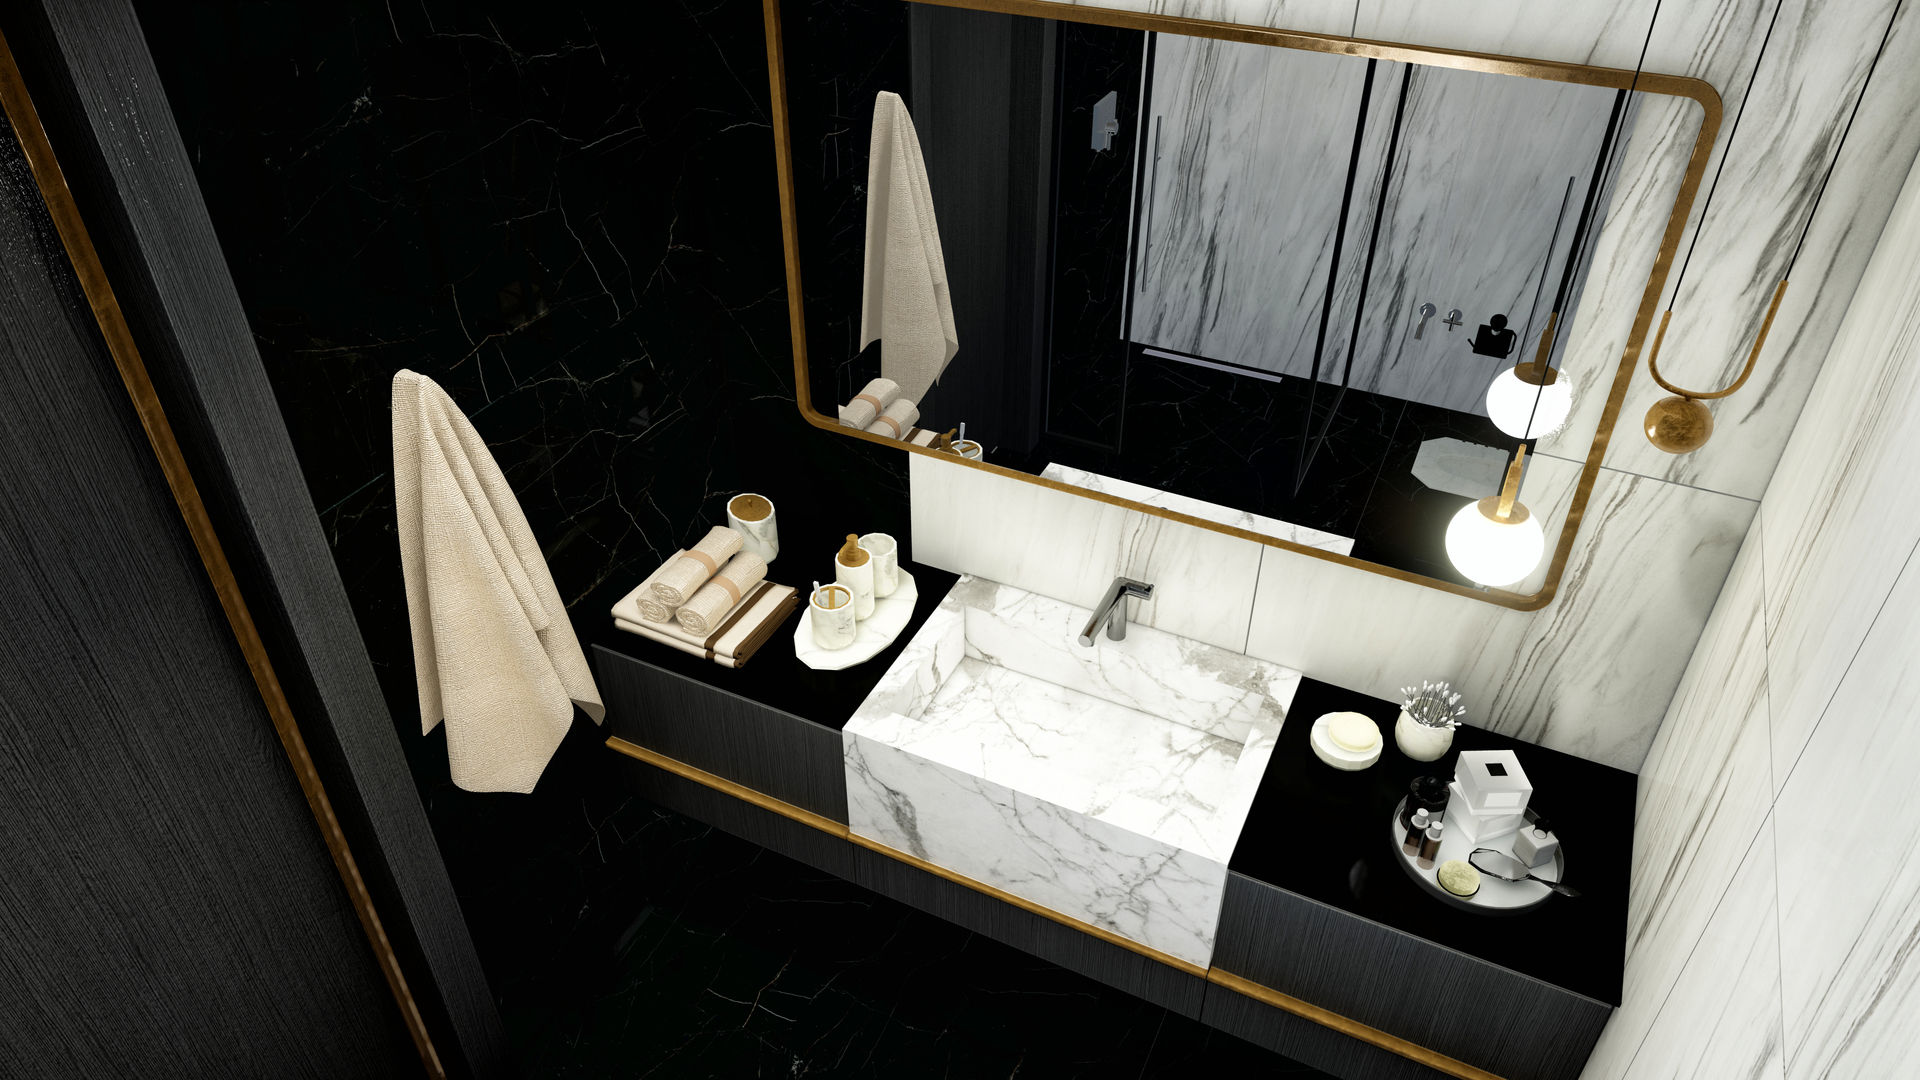 Misafir odası - banyo tasarımı ANTE MİMARLIK Modern Banyo